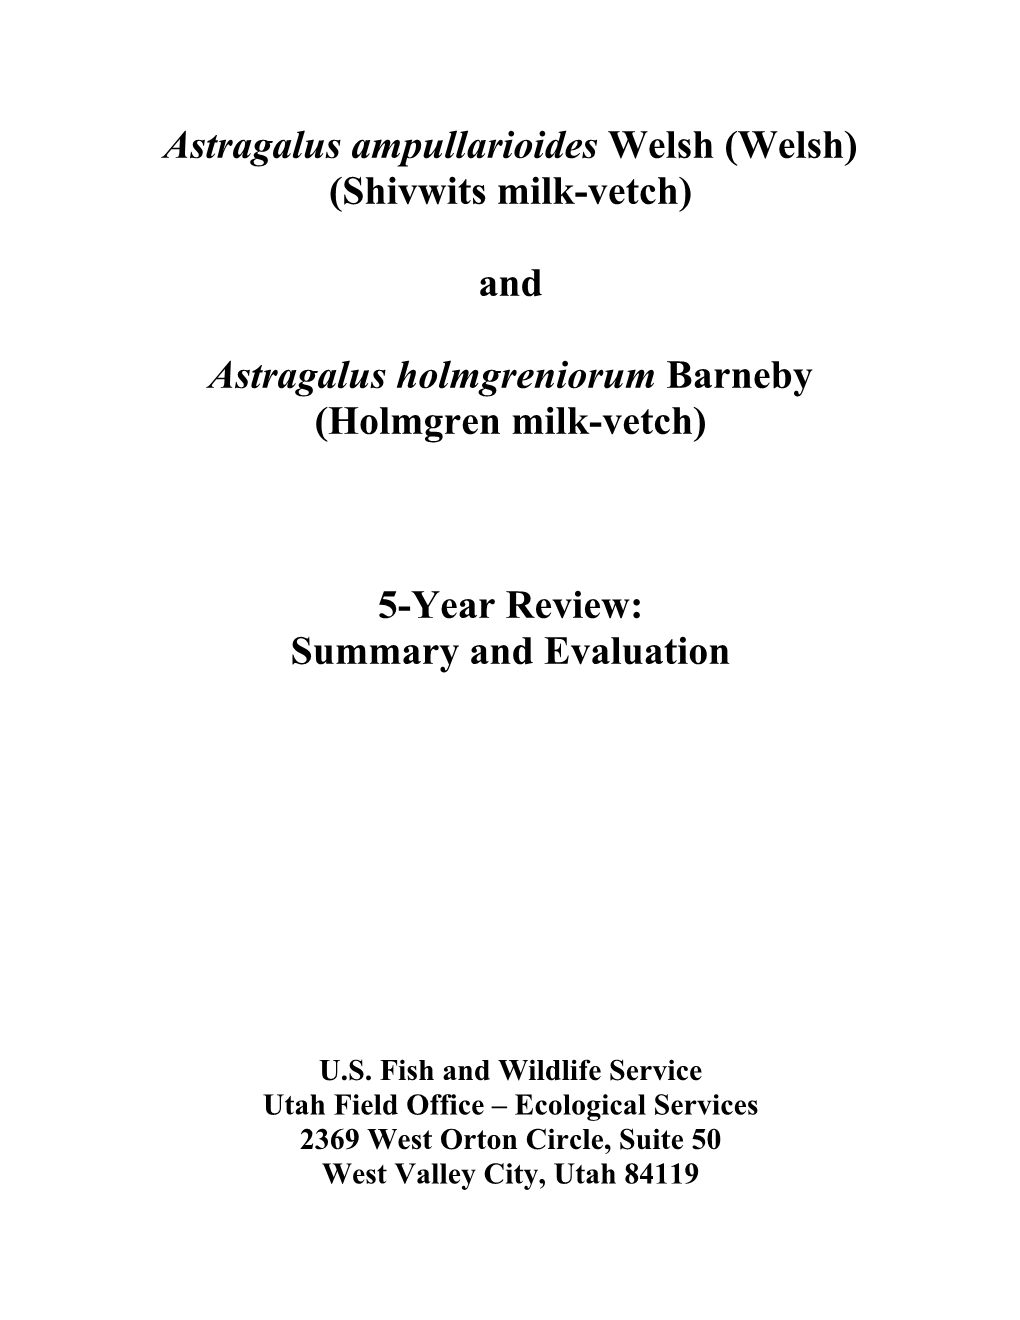 Astragalus Ampullarioides Welsh (Welsh) (Shivwits Milk-Vetch) and Astragalus Holmgreniorum Barneby (Holmgren Milk-Vetch) 5-Year